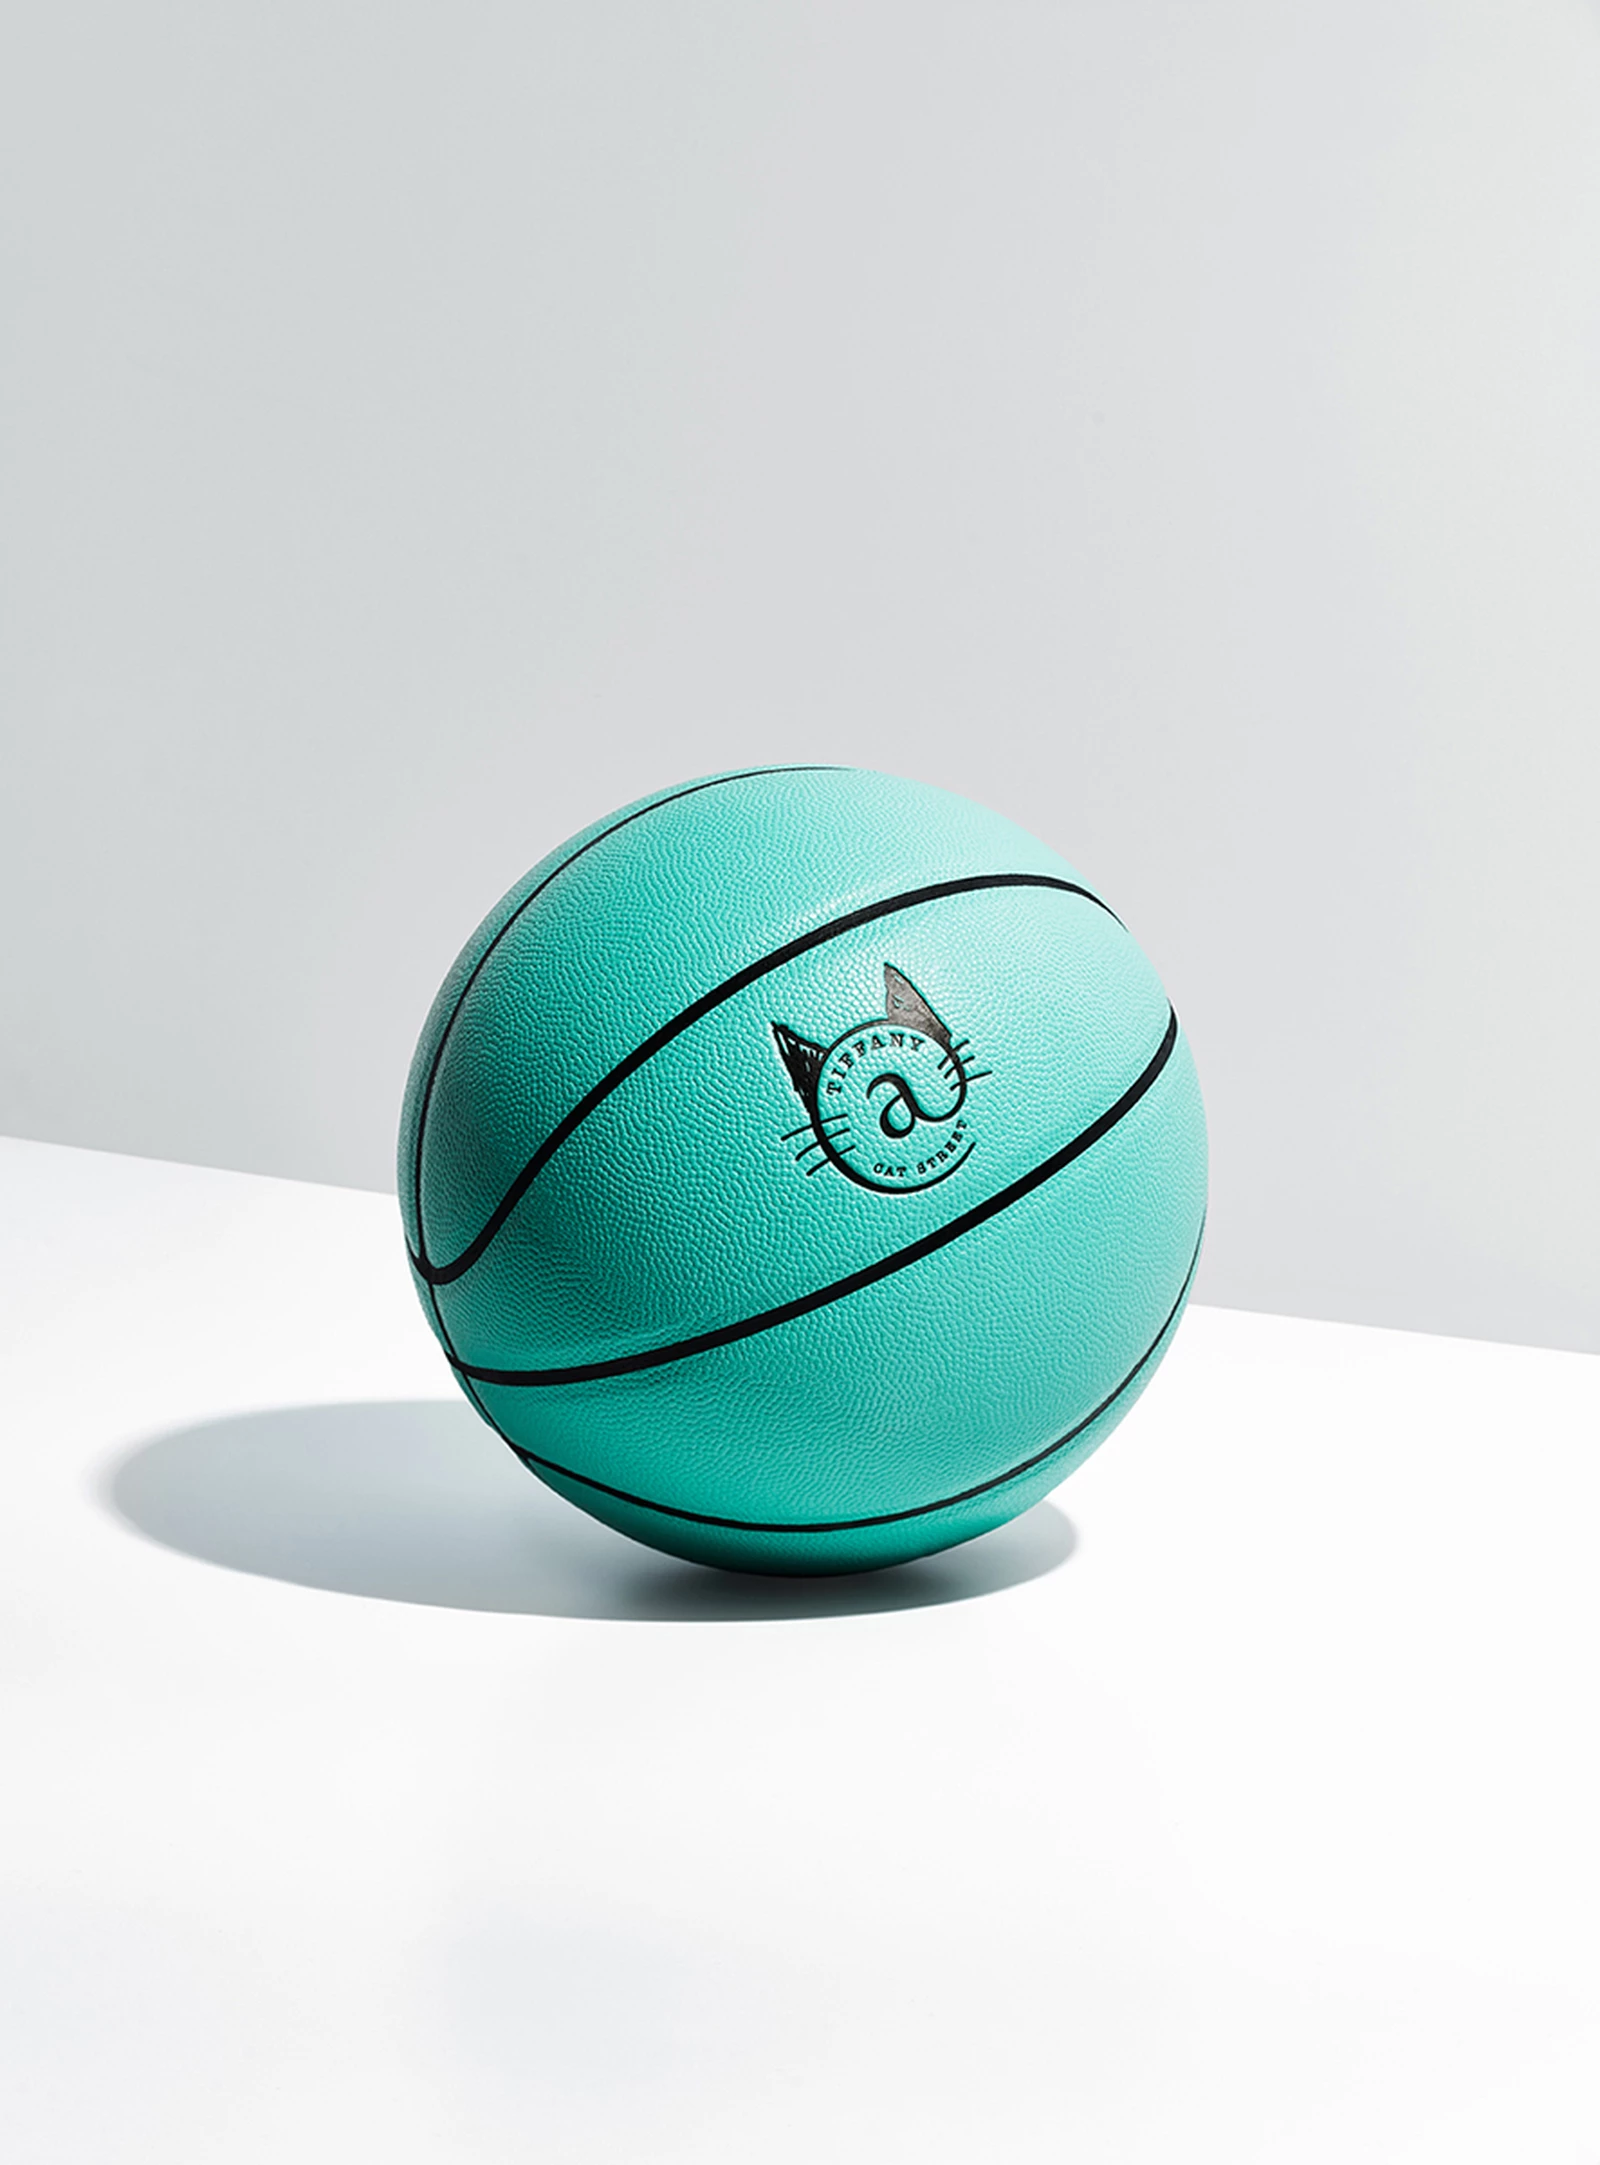 basketball ball by tiffany